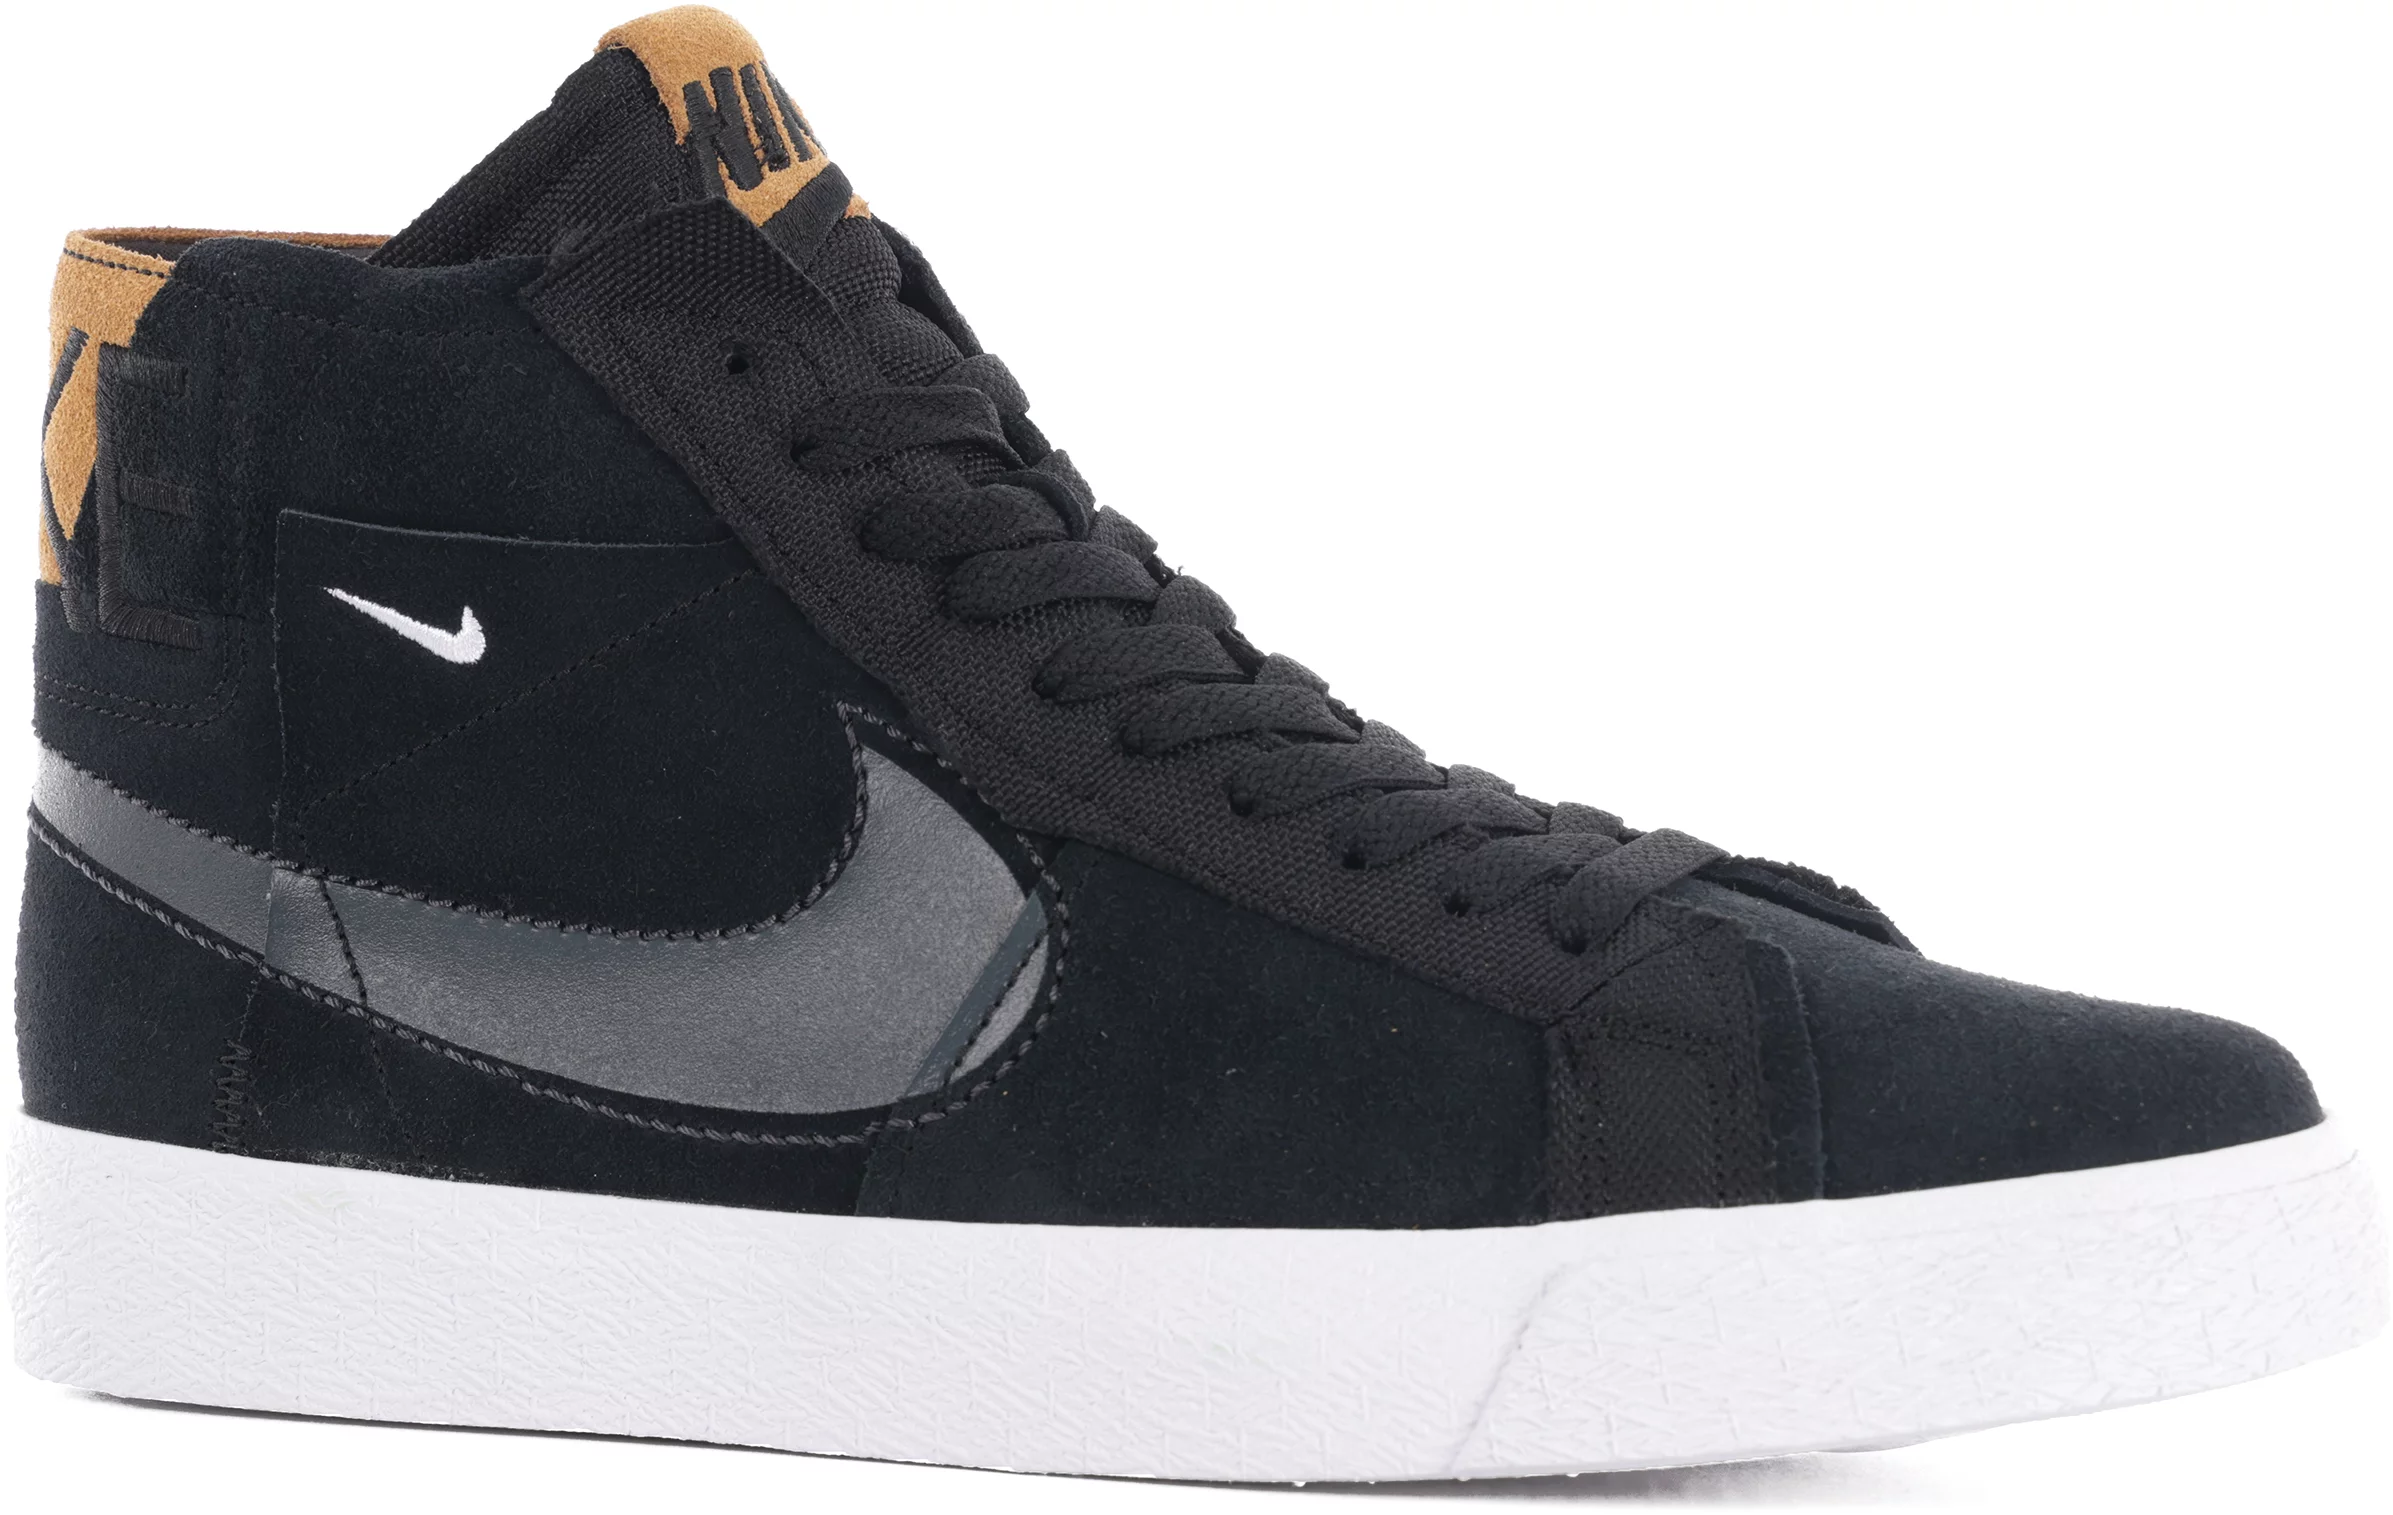 Nike SB Zoom Blazer Mid PRM Shoes - black/anthracite-black-white-desert ochre-white - Free Shipping Tactics